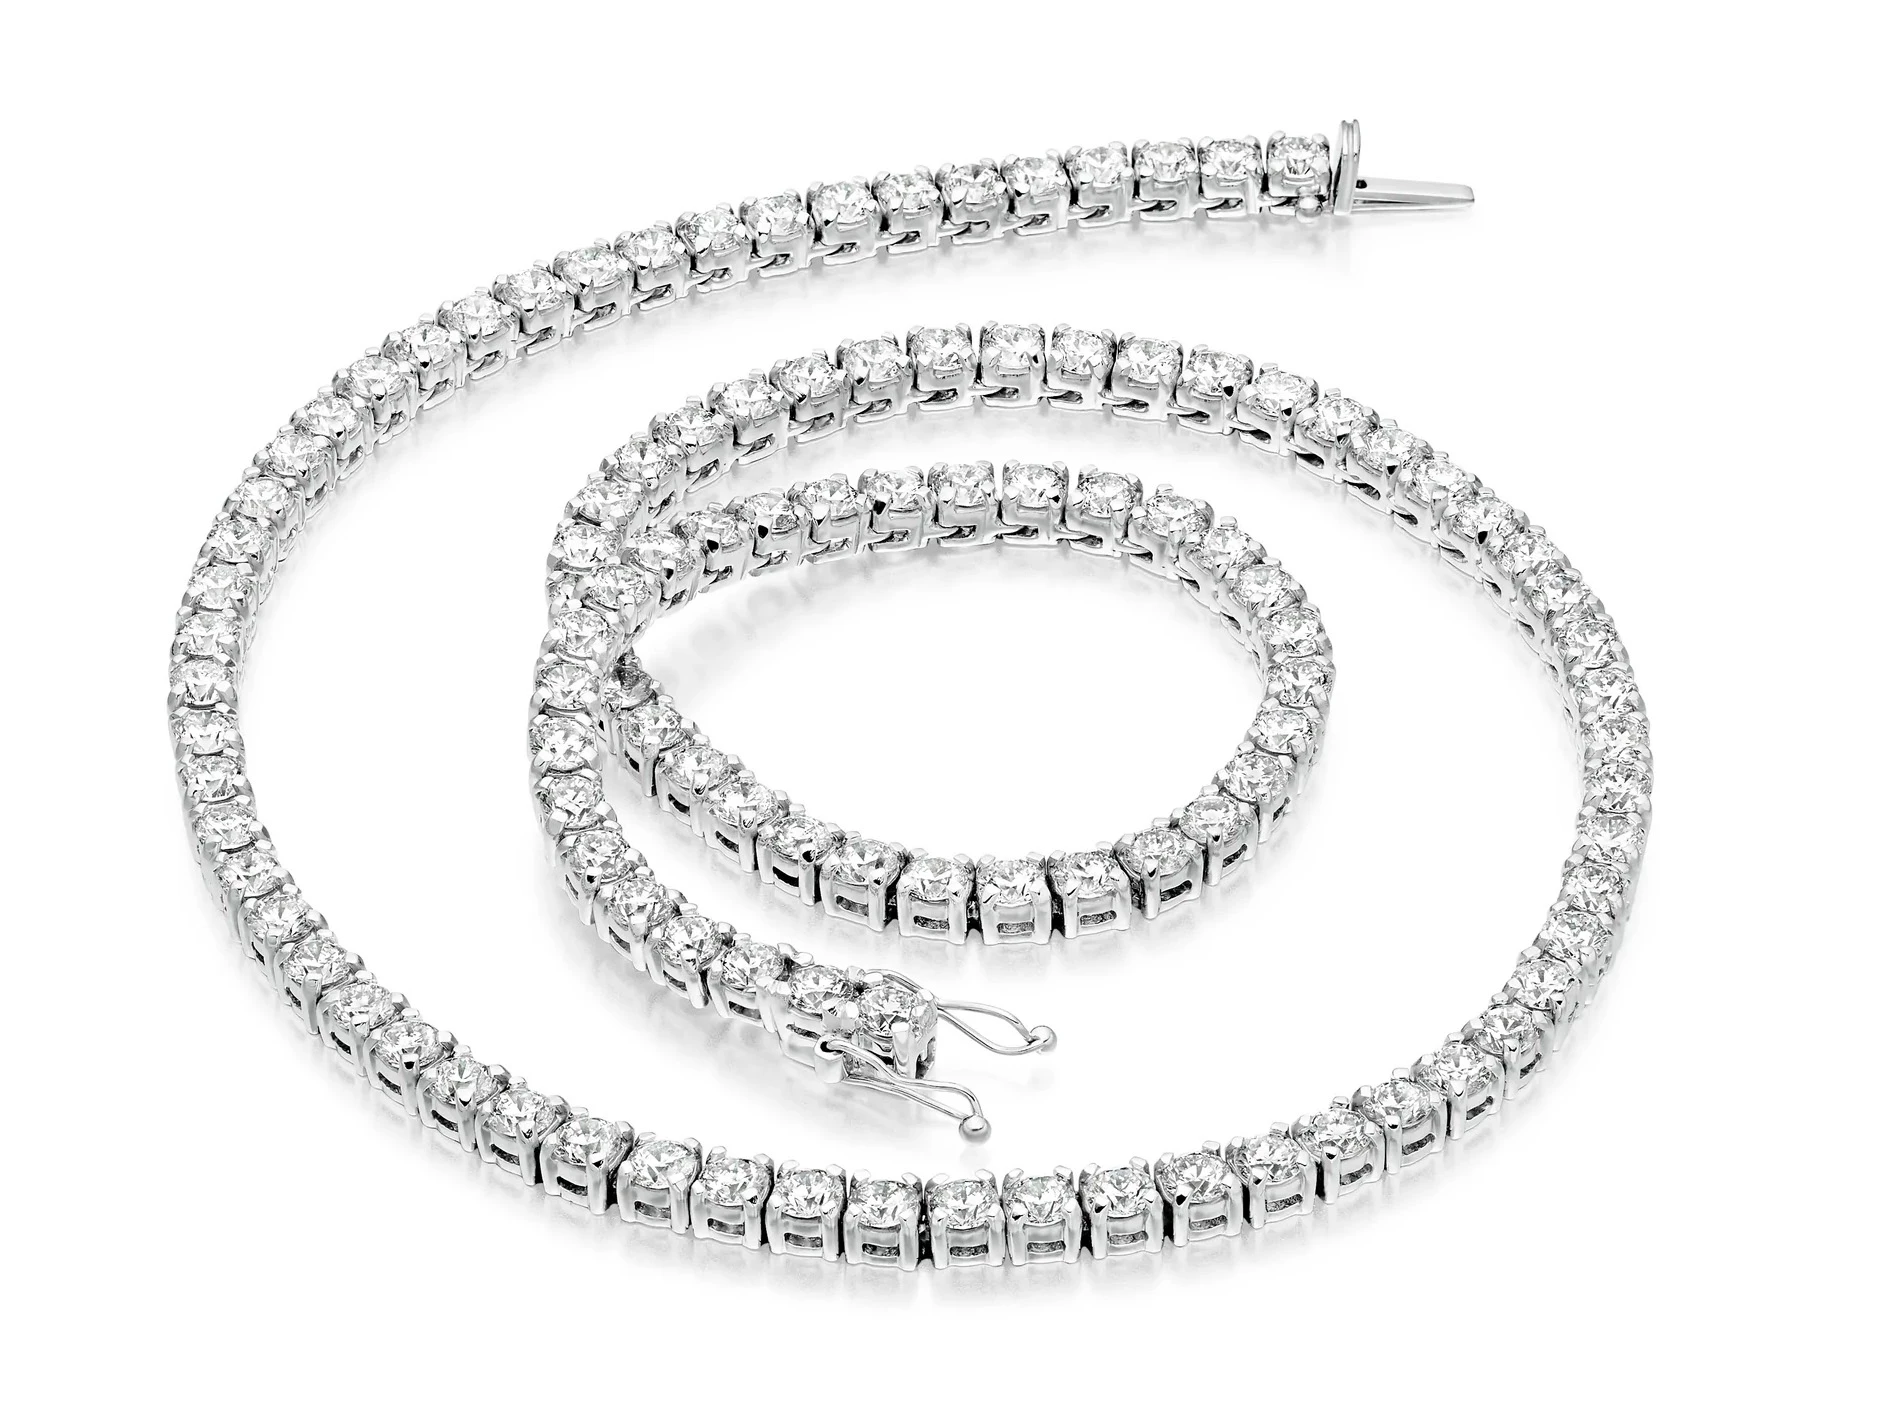 13ct Ettore Diamond Tennis Necklace in 18K White Gold